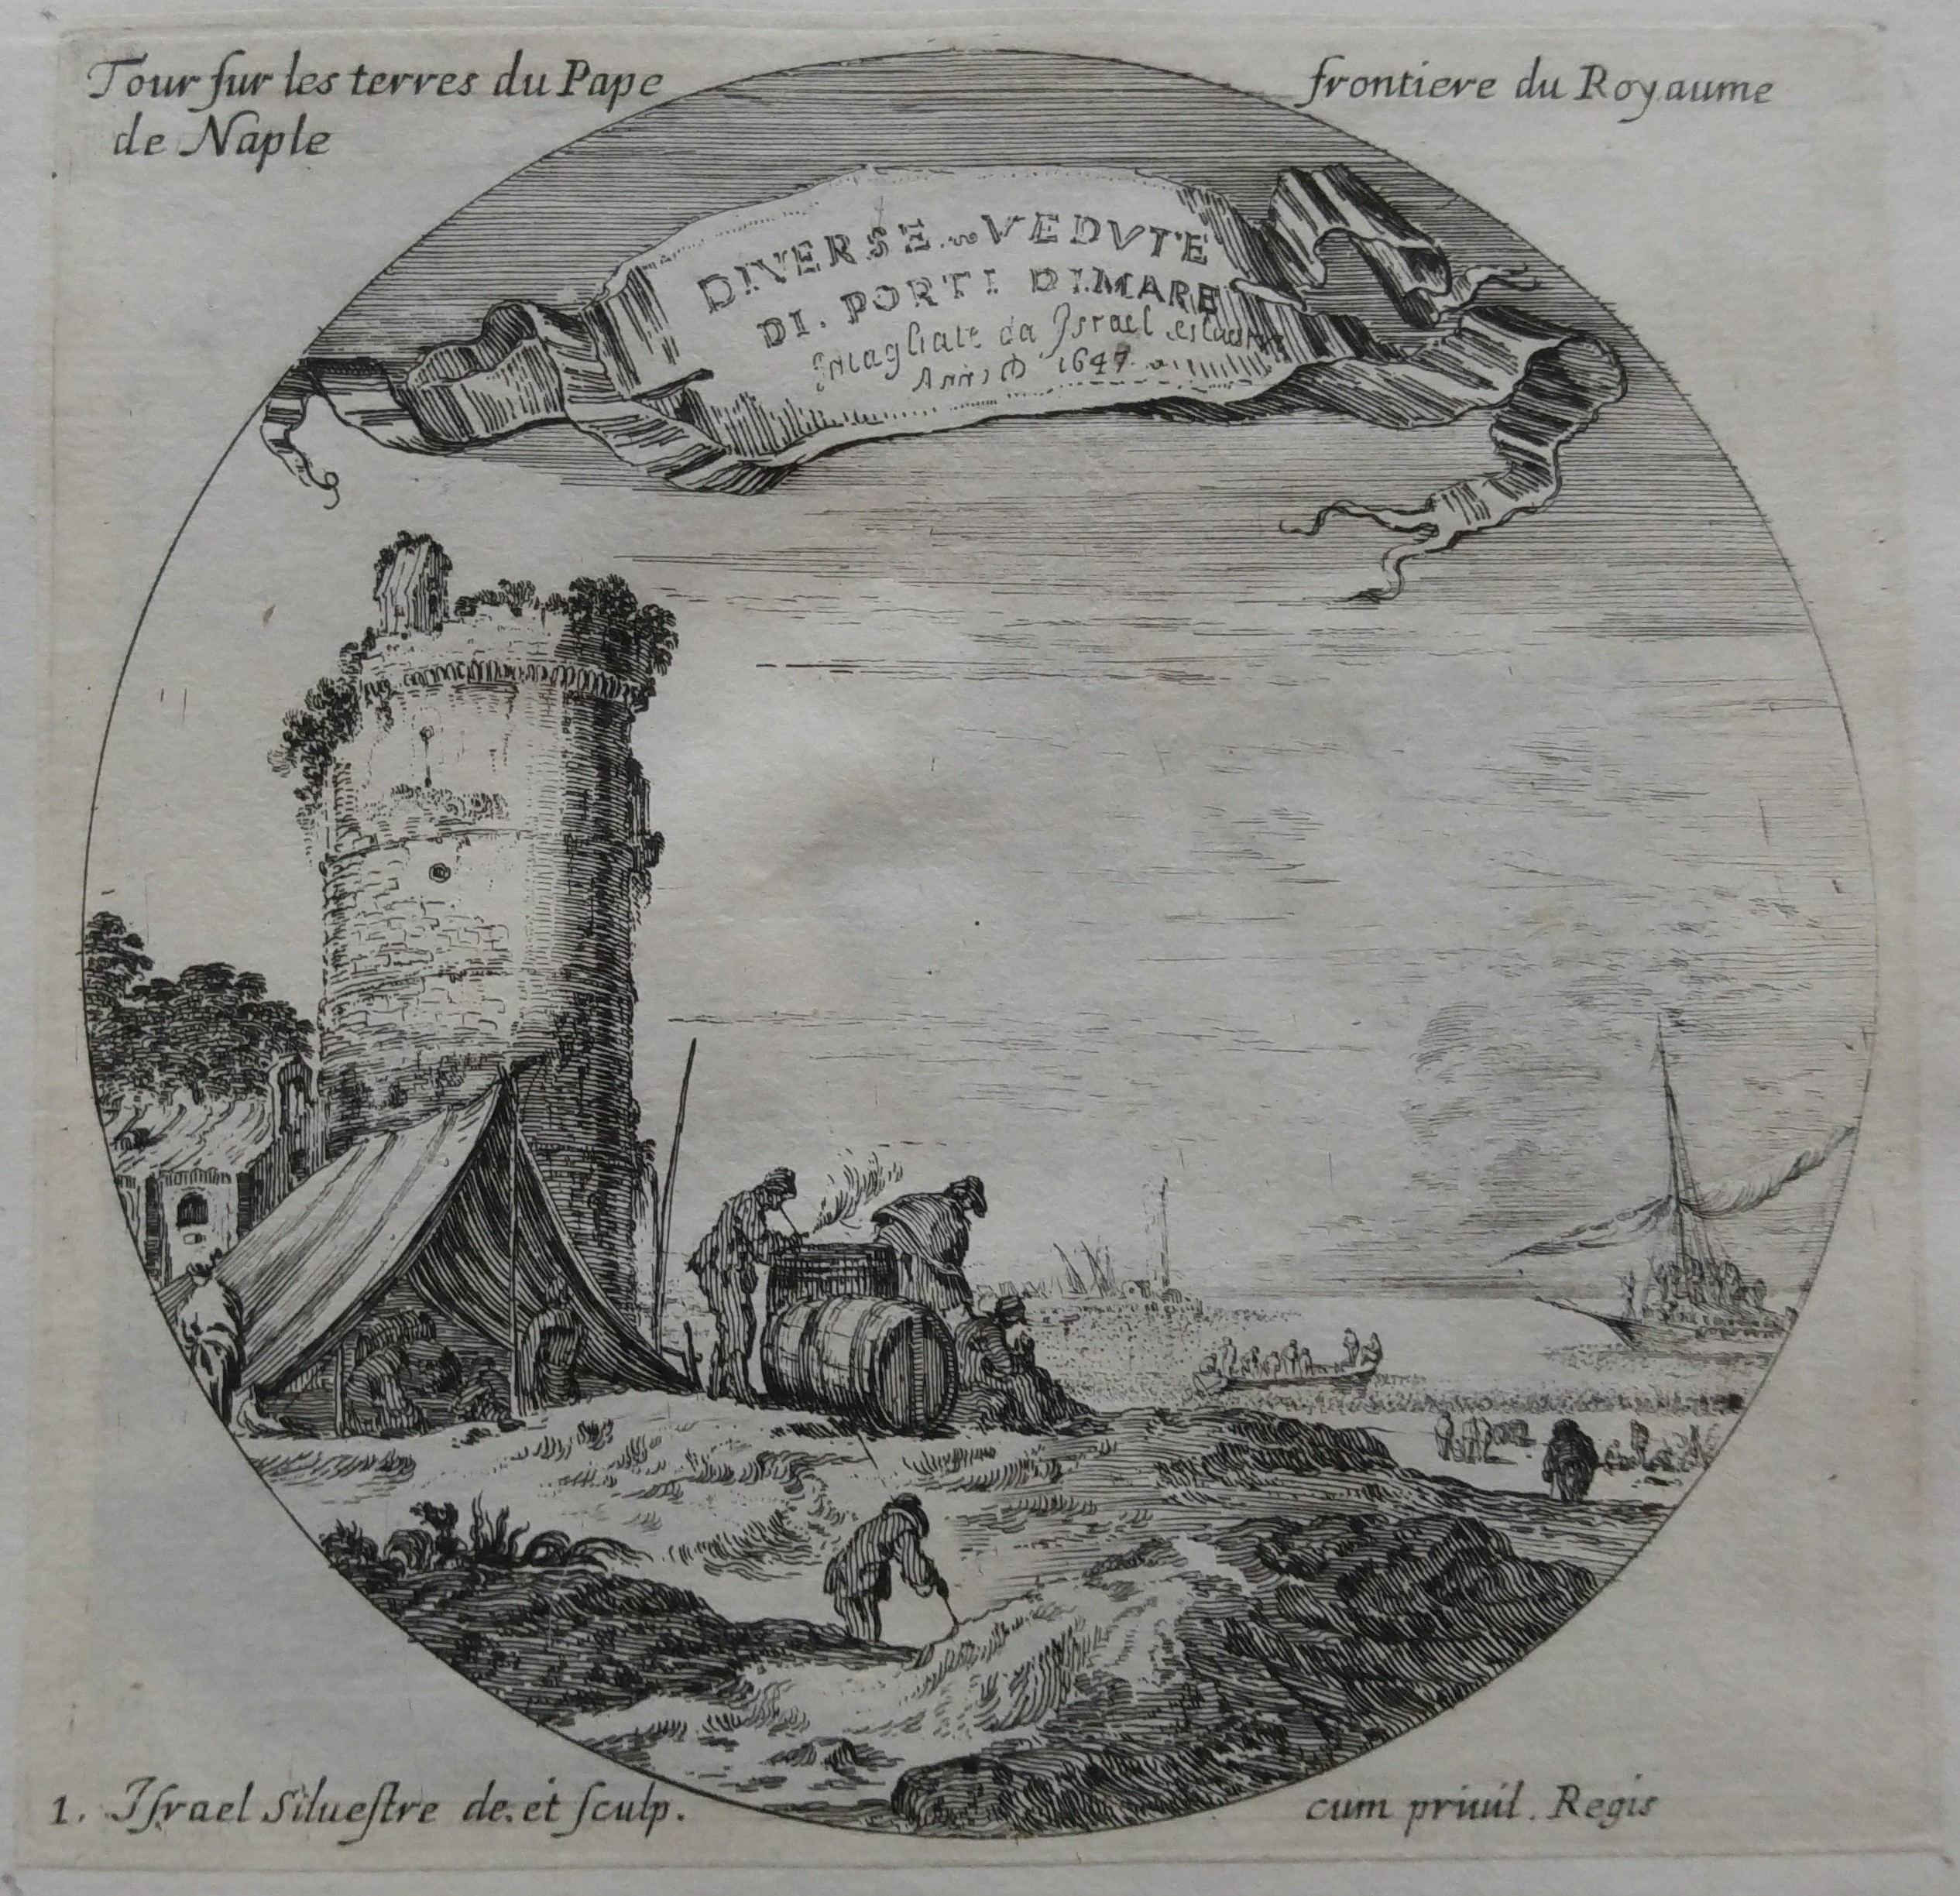 Israël Silvestre : Diverse Vedute Di Porti Di Mare intagliate da Israël Silvestre. Anno D 1647.<br/>Tour sur les terres du Pape frontière du Royaume de Naples.